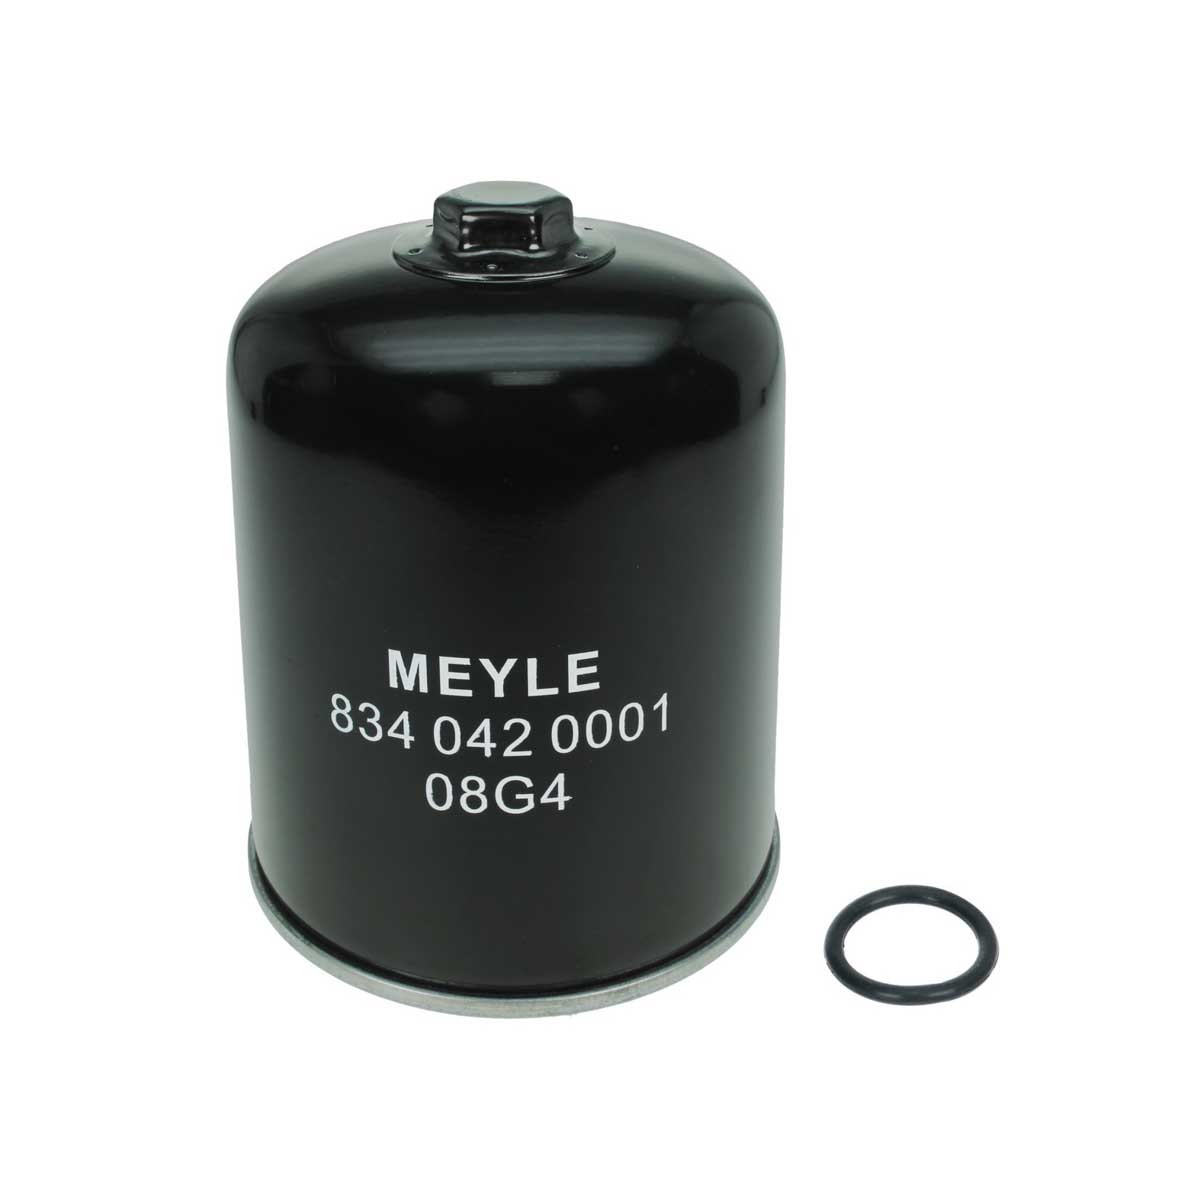 MBX0213 MEYLE 8340420001 Air Dryer, compressed-air system 1455253